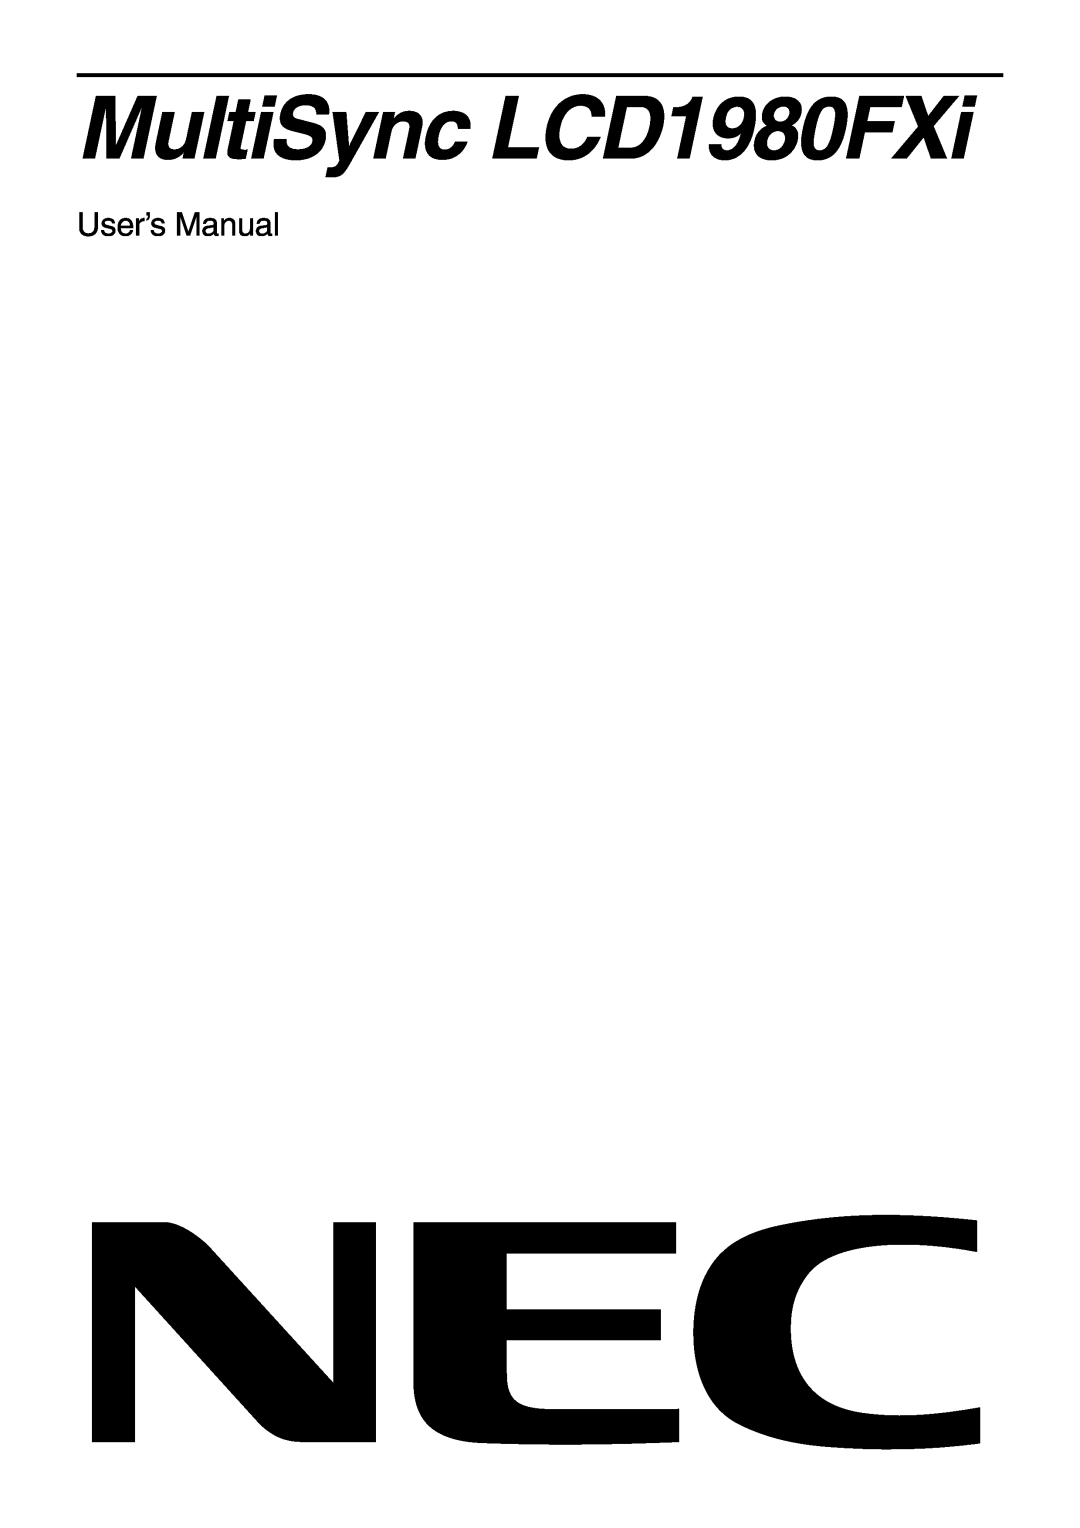 NEC user manual MultiSync LCD1980FXi, User’s Manual 